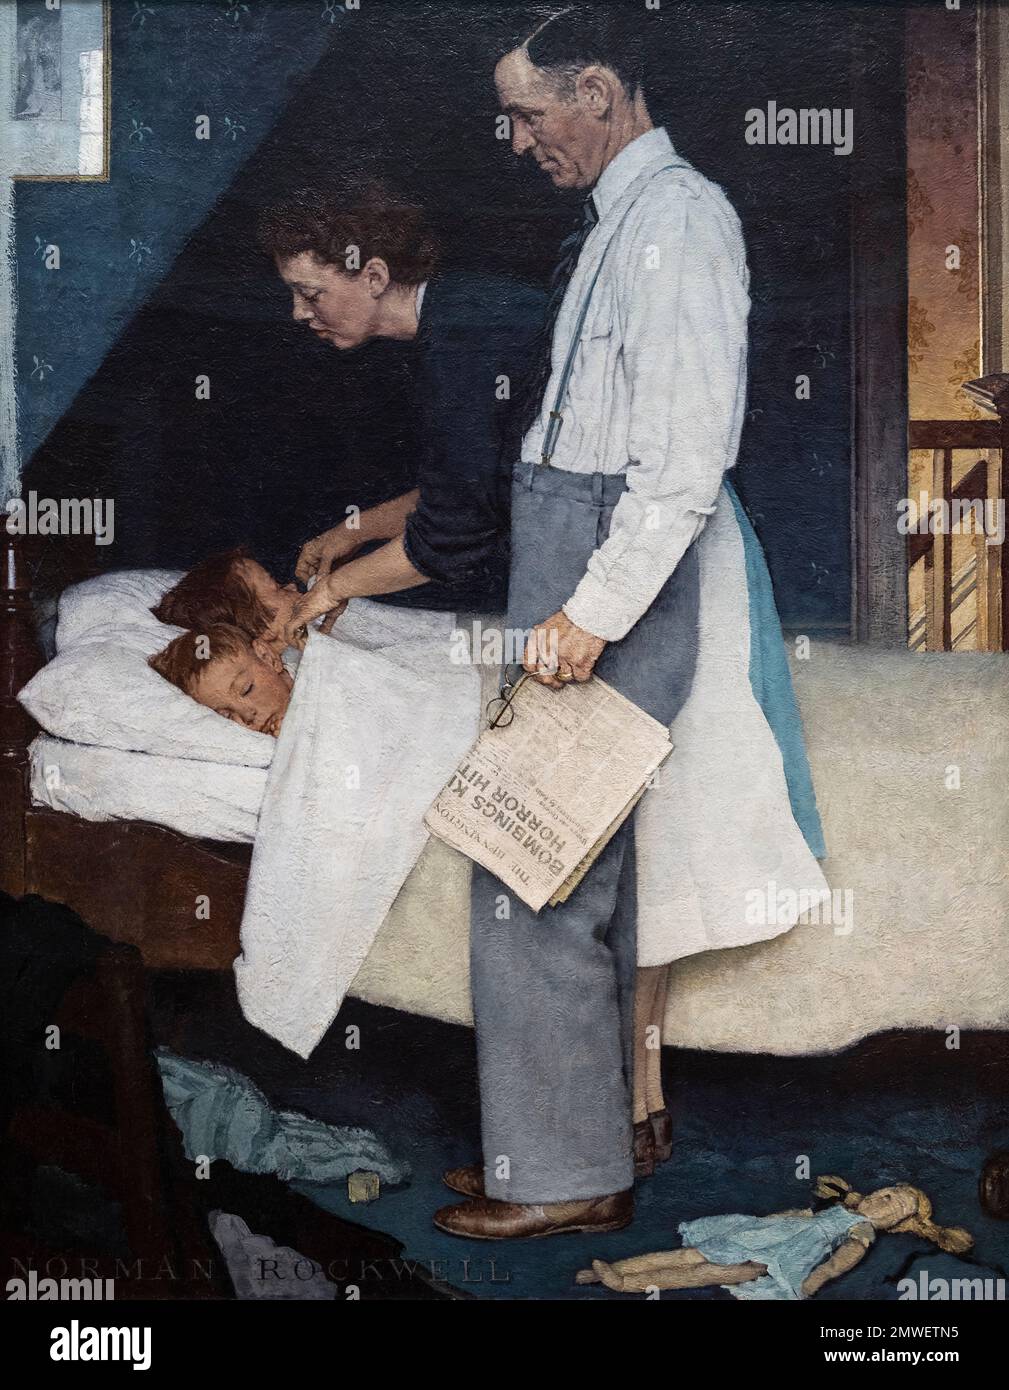 Norman Rockwell-Gemälde namens Freedom from Fear, 1942 für das Saturday Evening Post Magazin Stockfoto